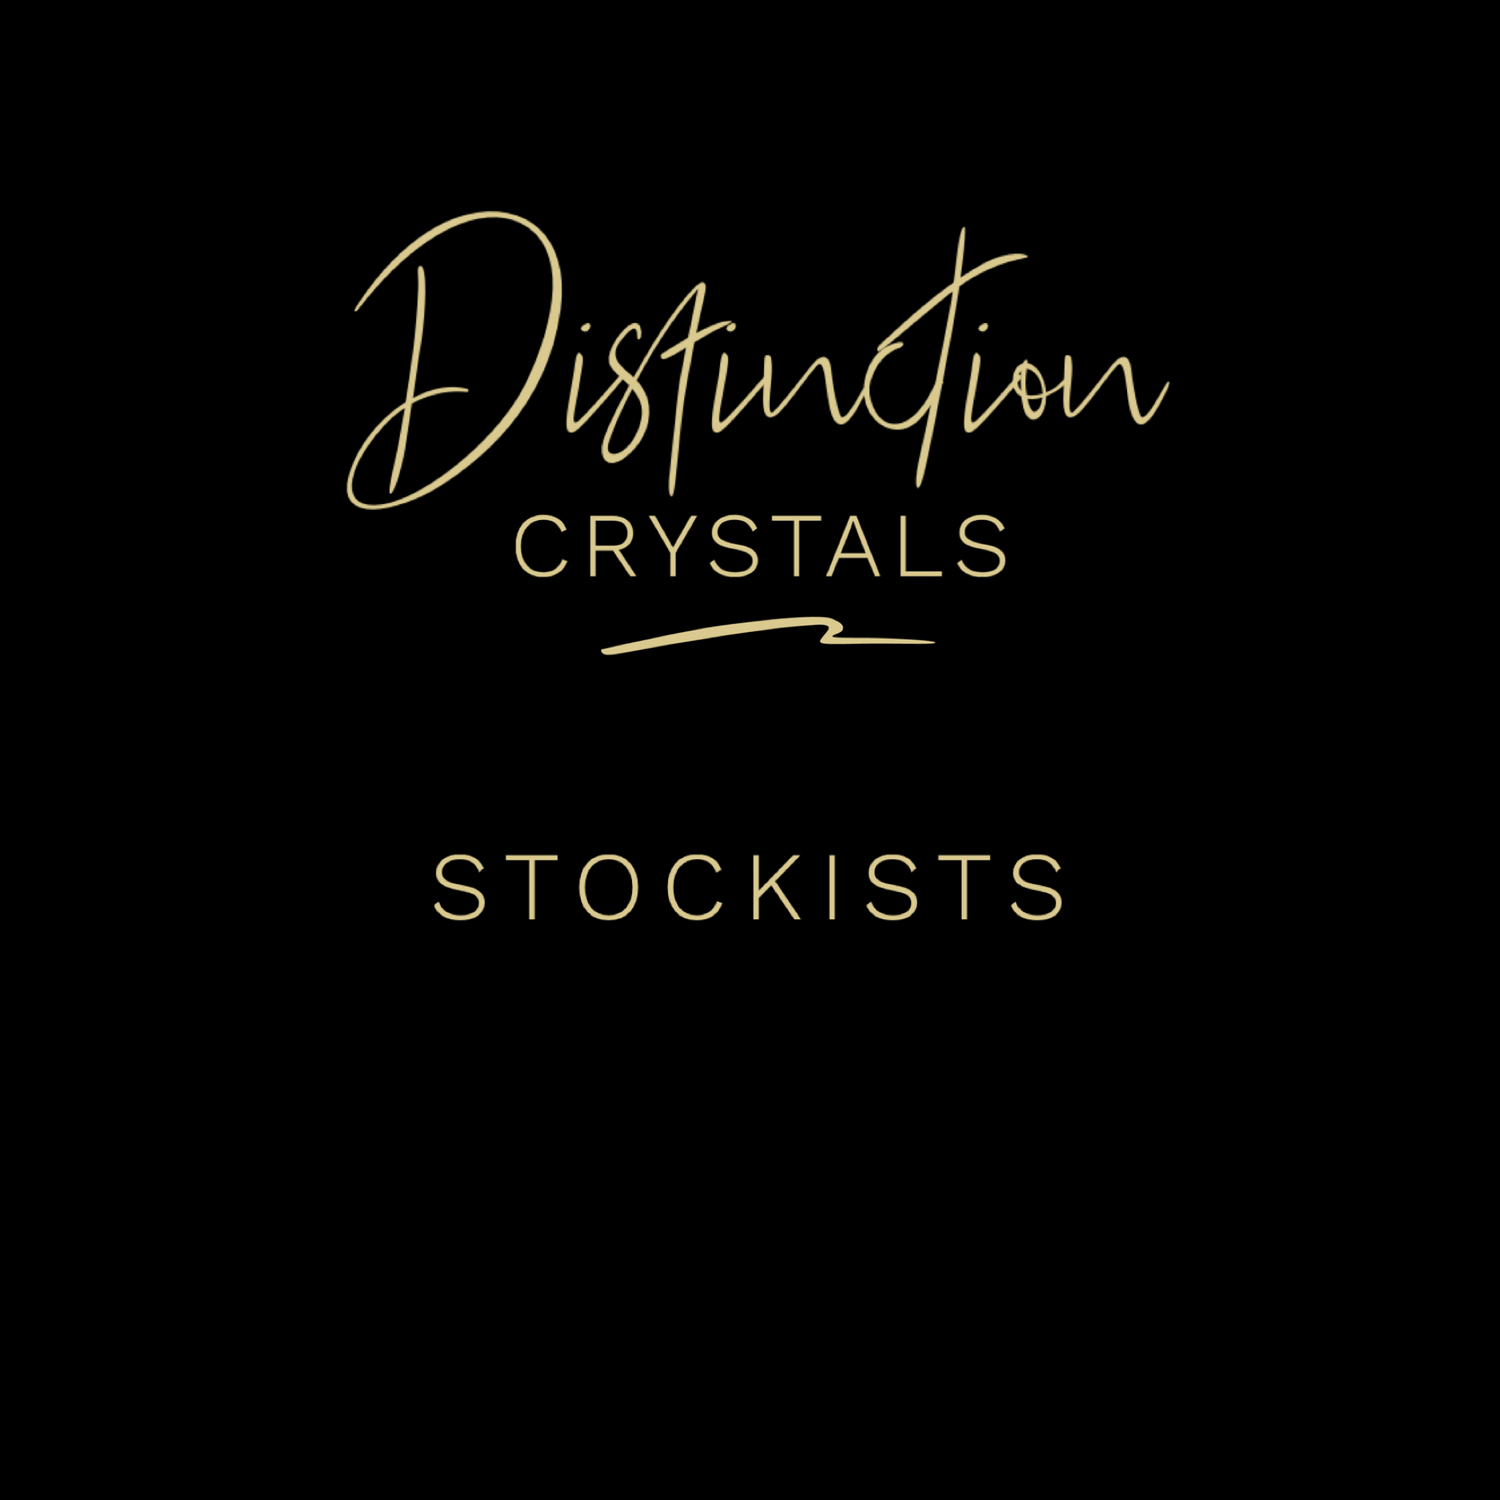 uk crystal wholesaler, crystal stockist, large crystal wholesale, premium quality crystal wholesale united kingdom at crystal wholesale warehouse